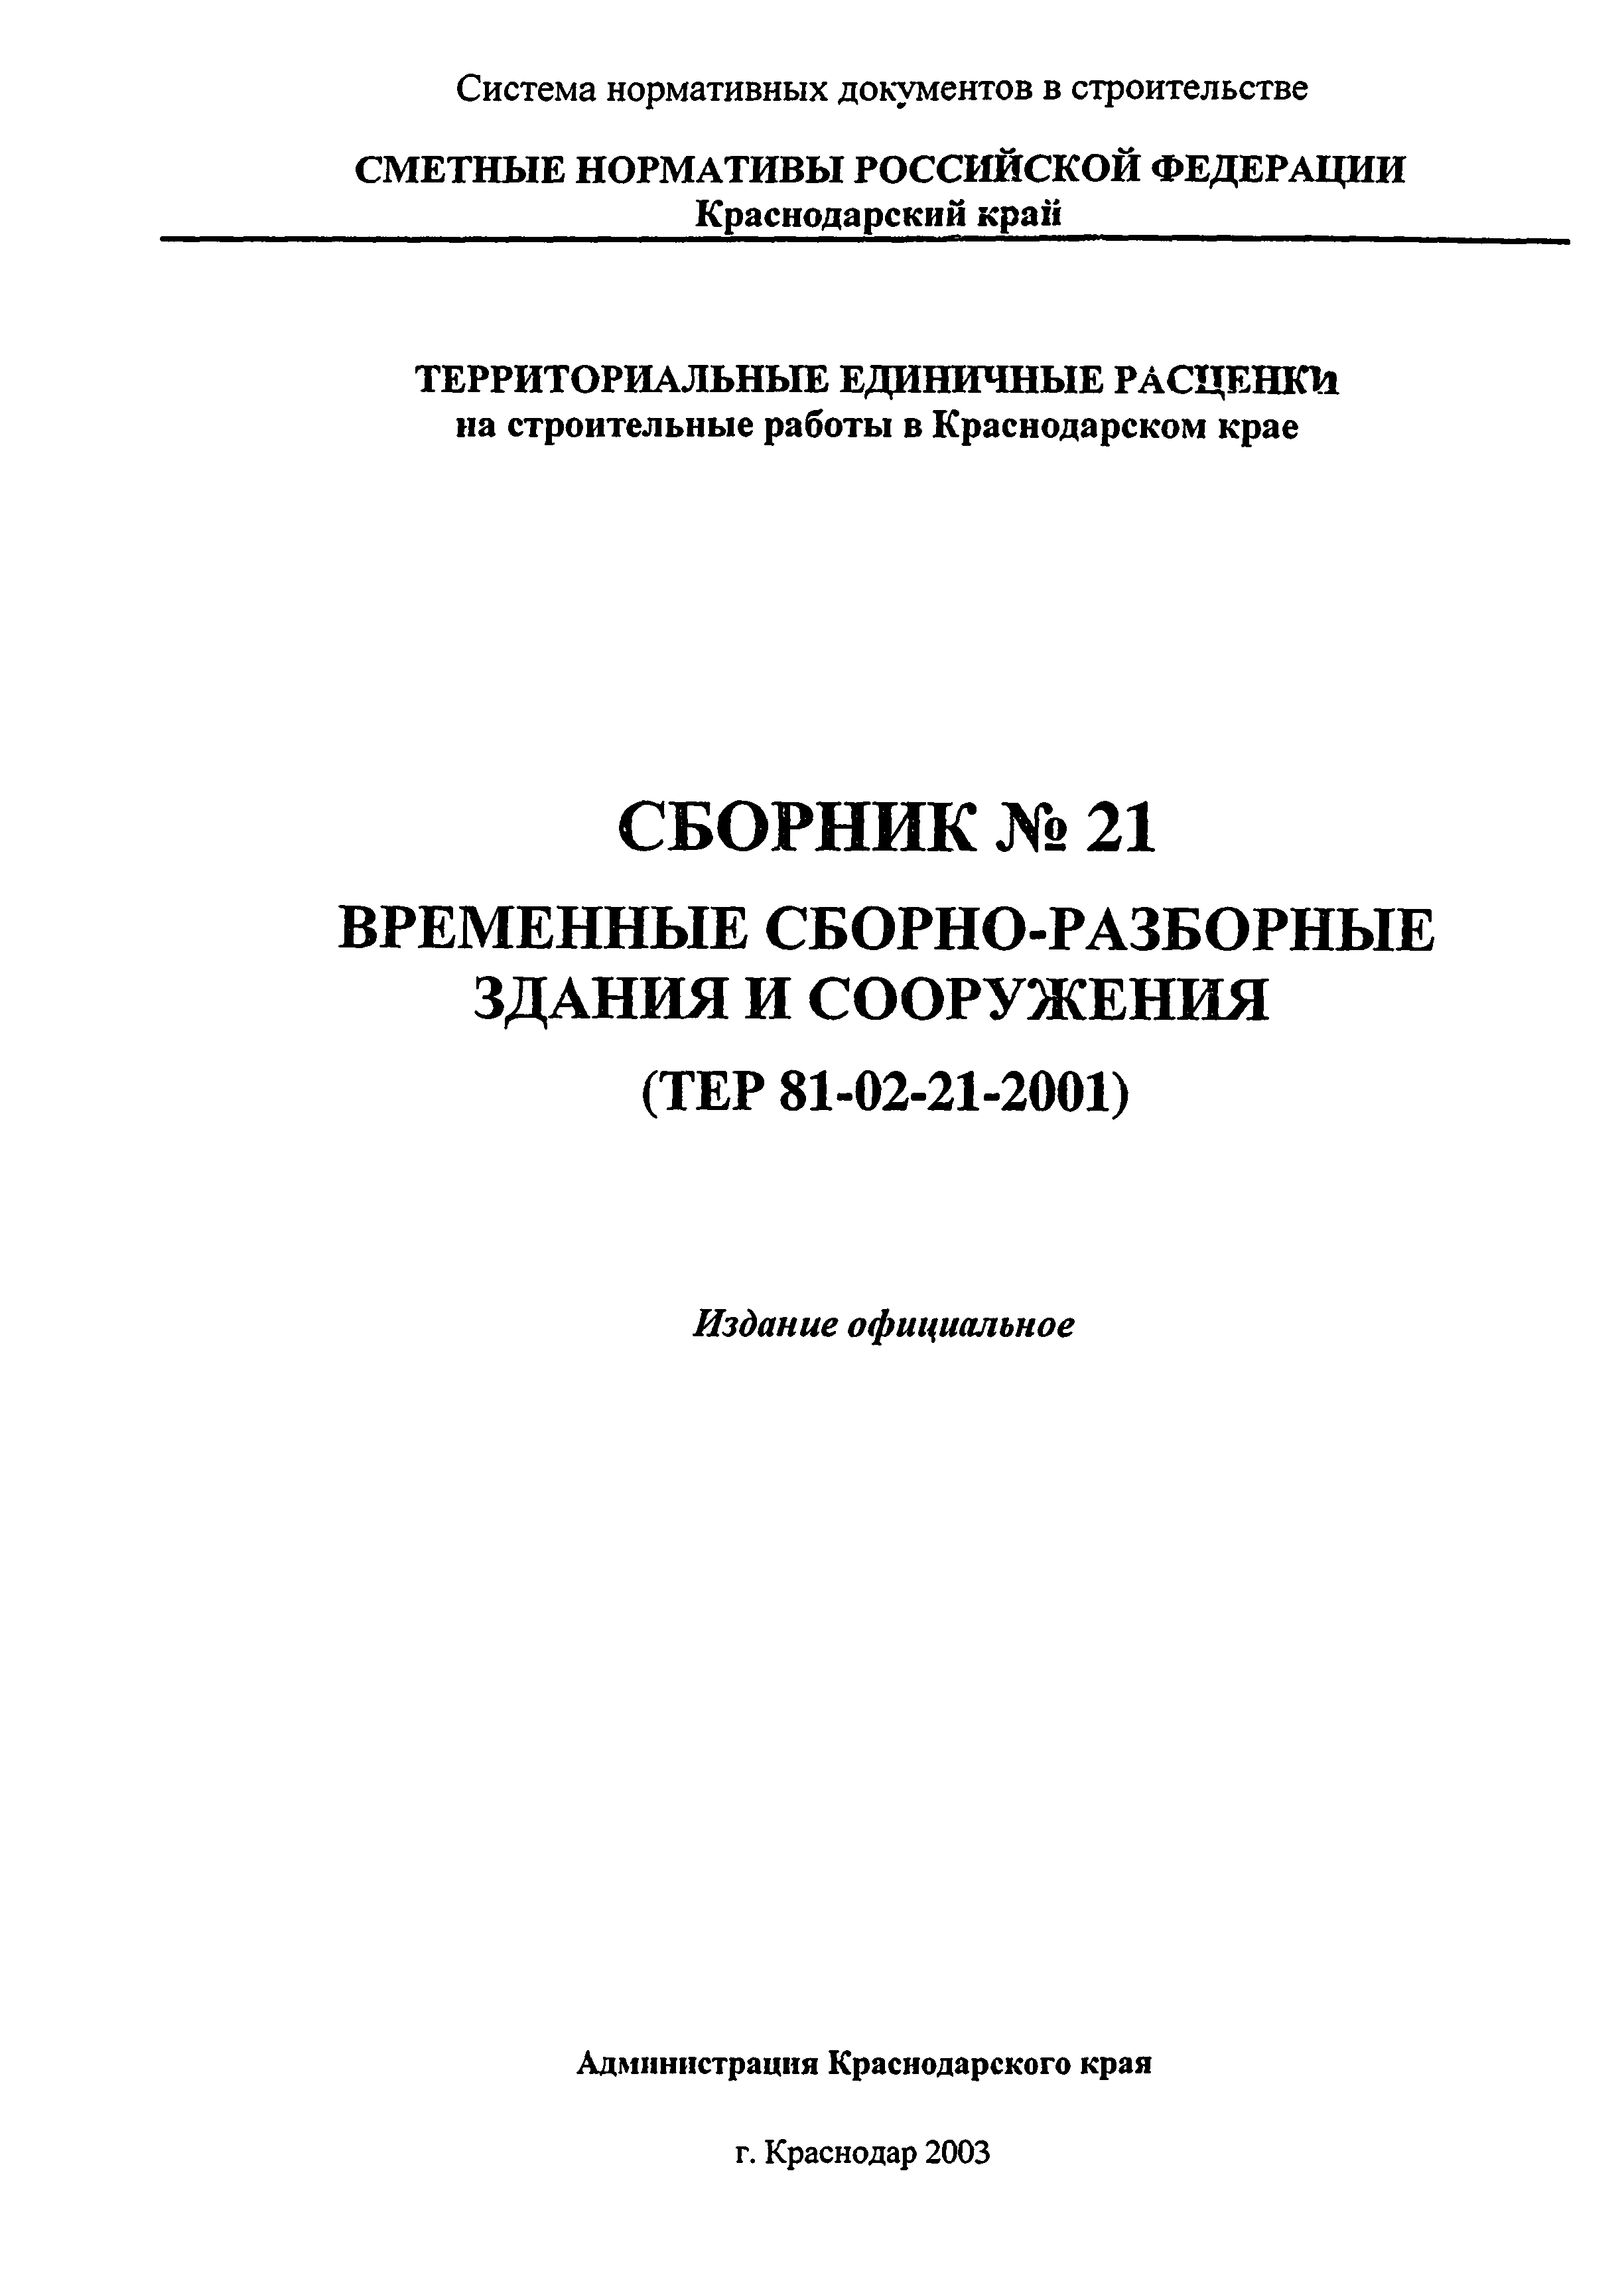 ТЕР Краснодарского края 2001-21